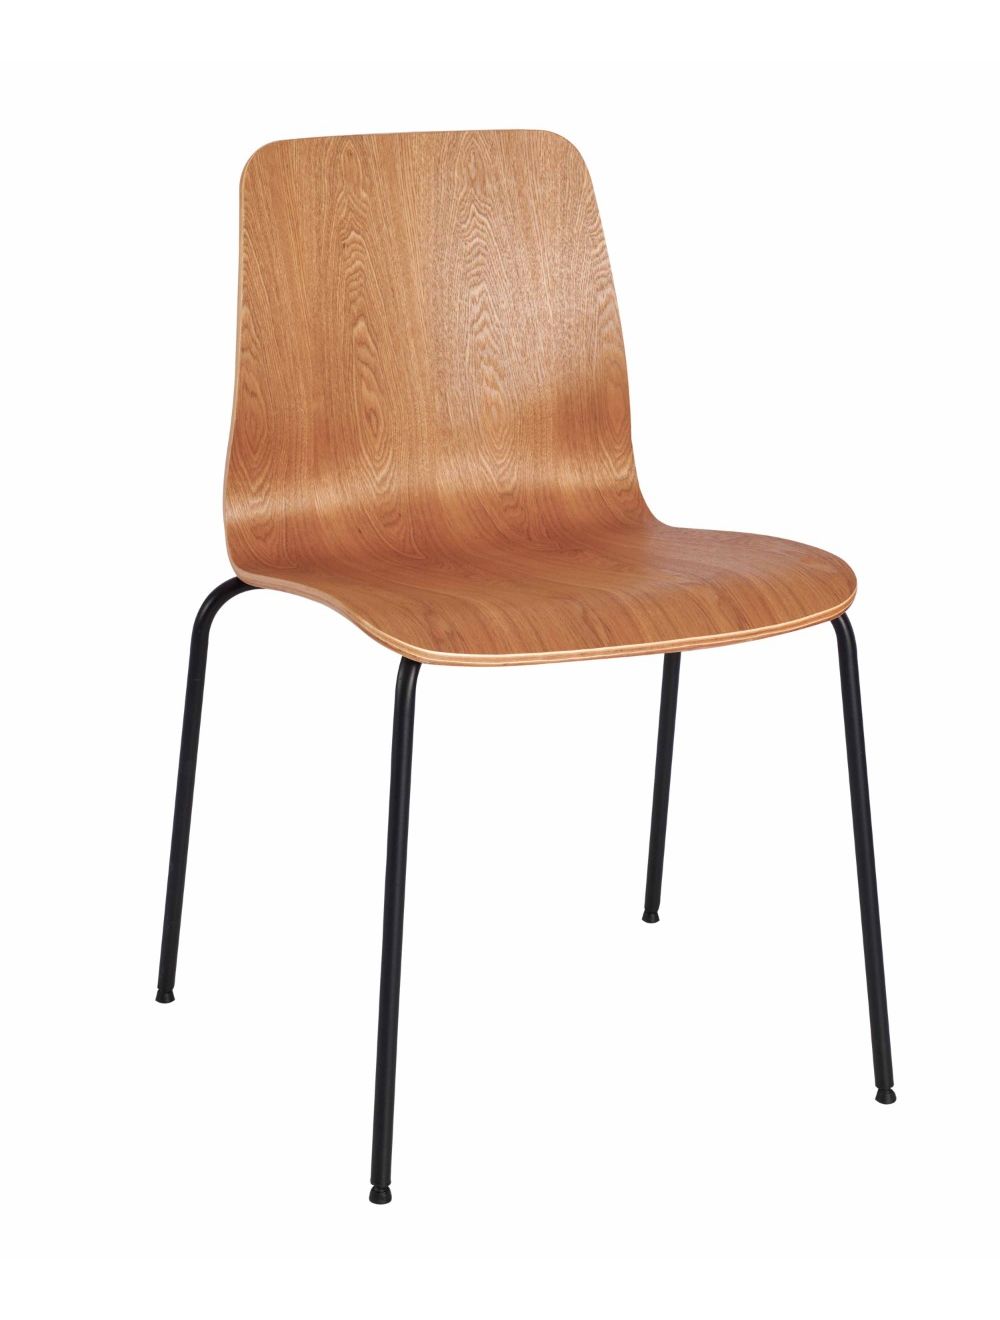 Danos Side Chair Clear Lacquer - 4 Leg